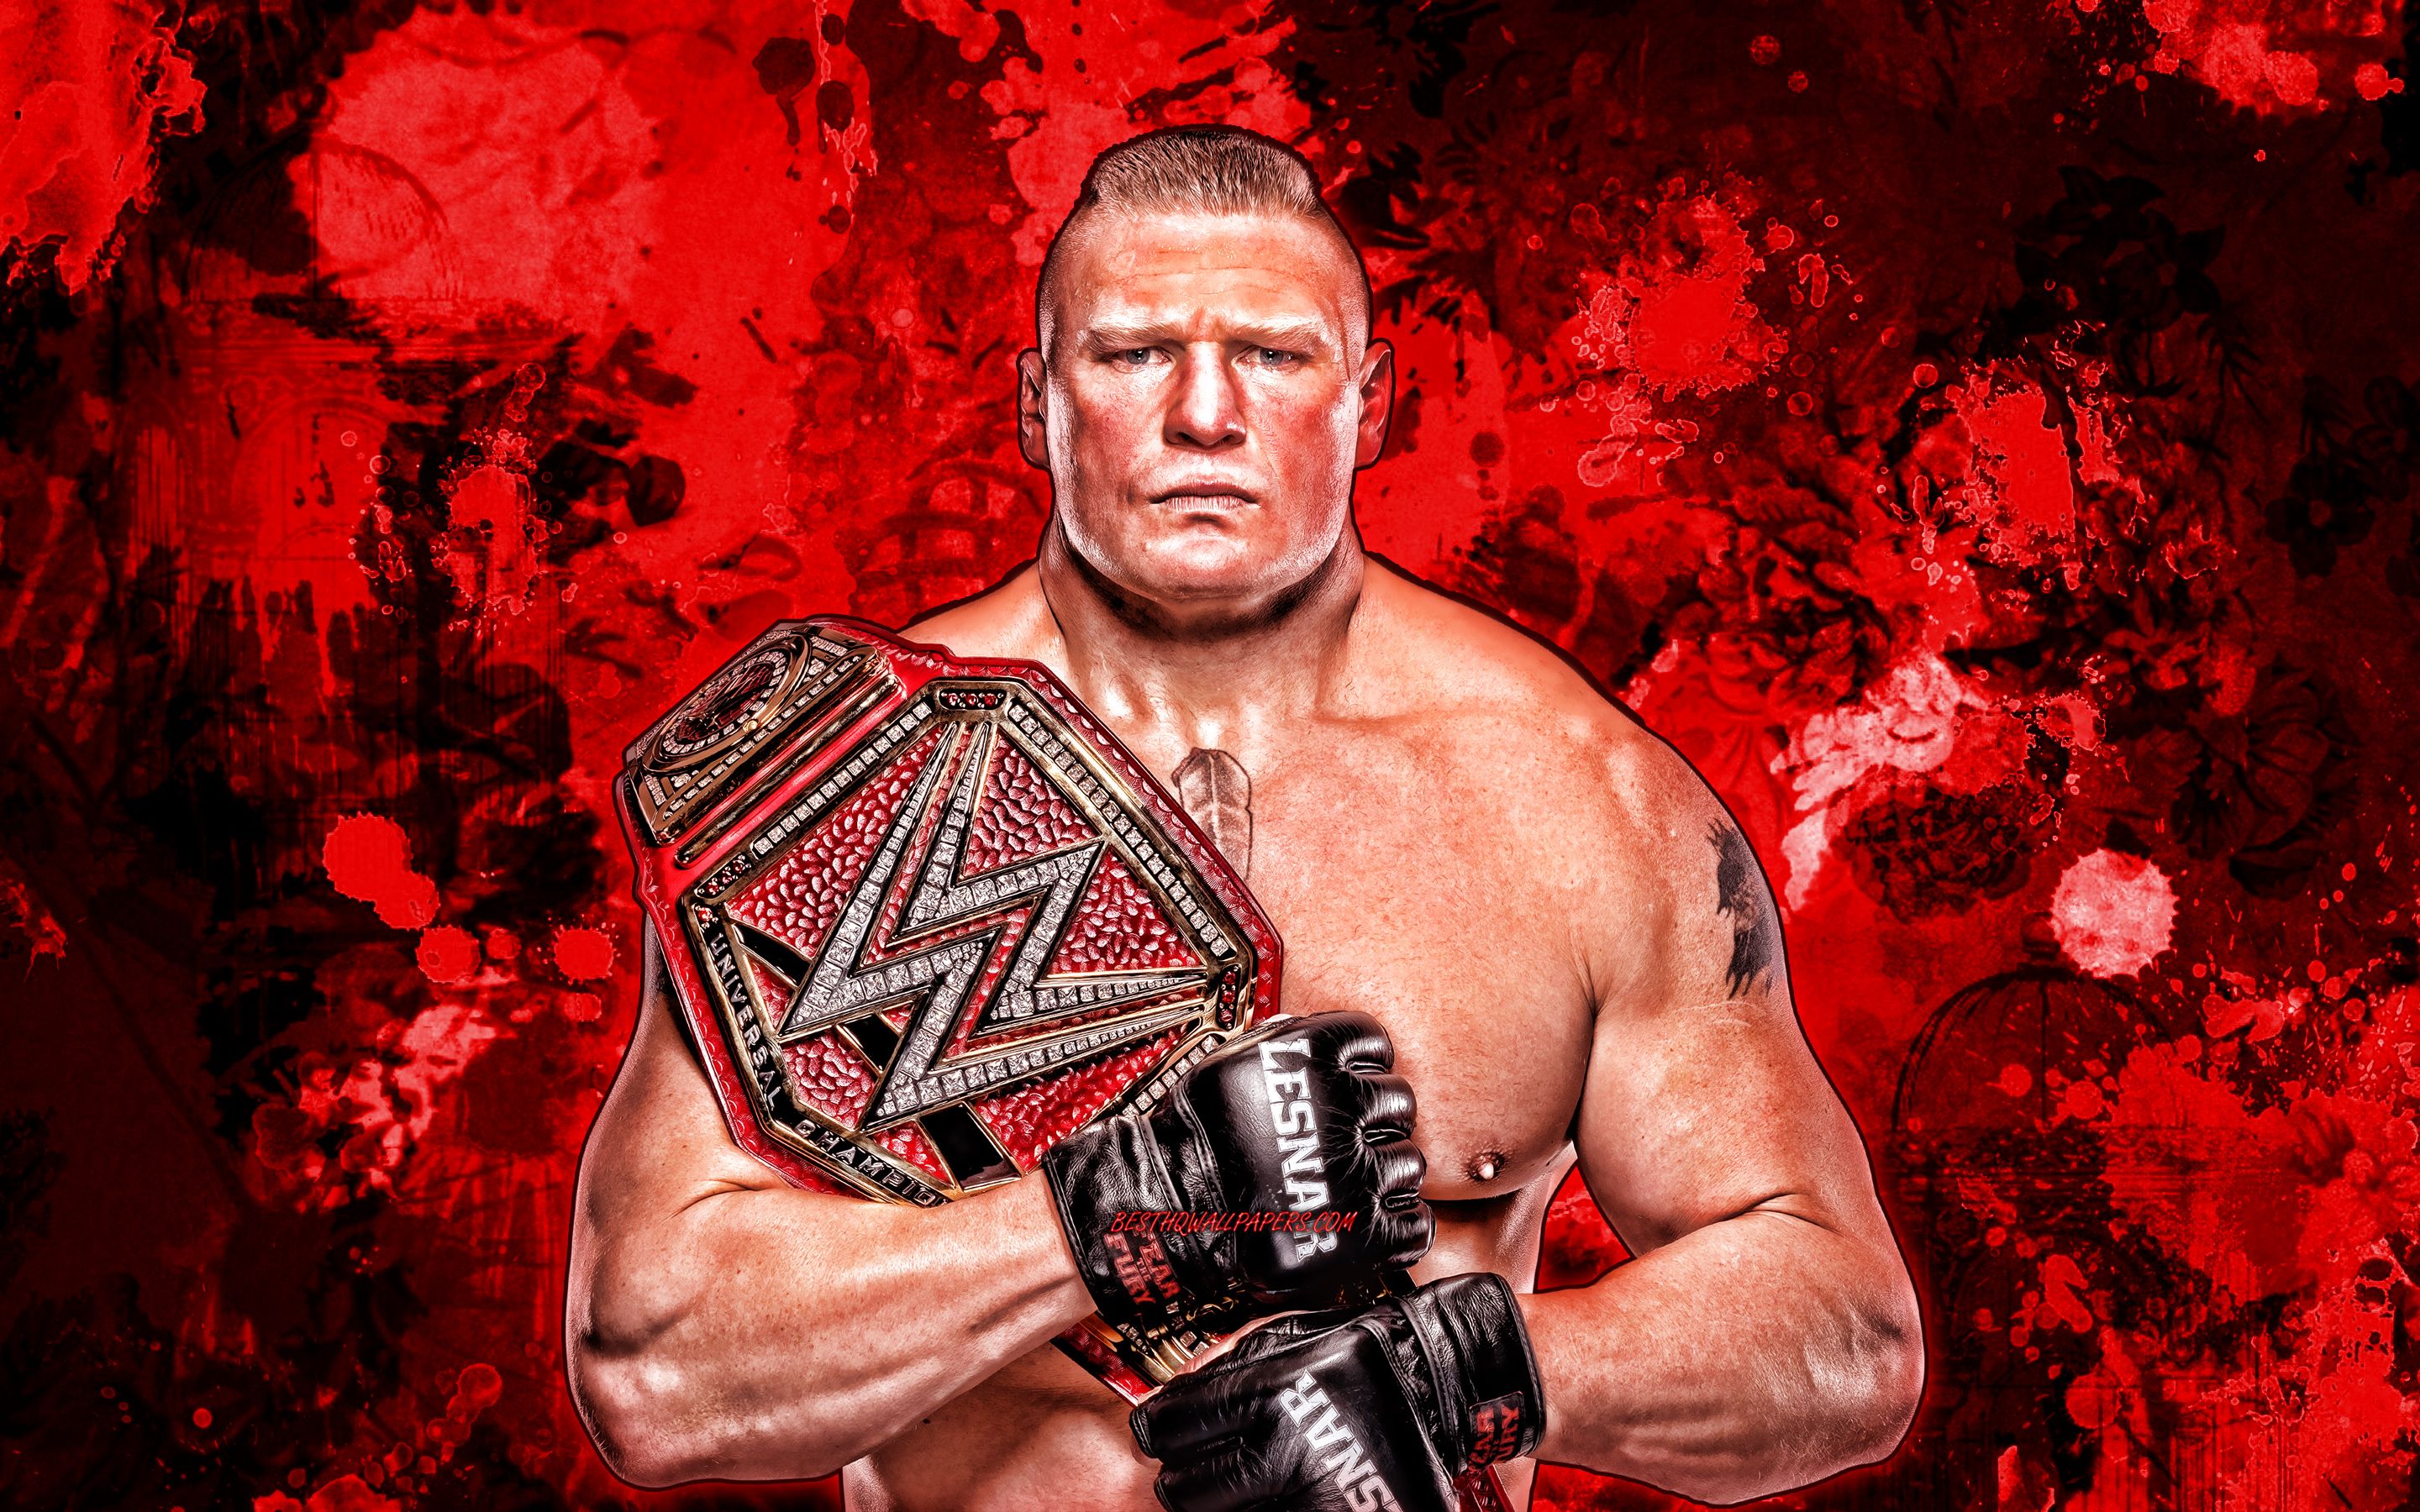 Download wallpaper Brock Lesnar, red paint splashes, WWE